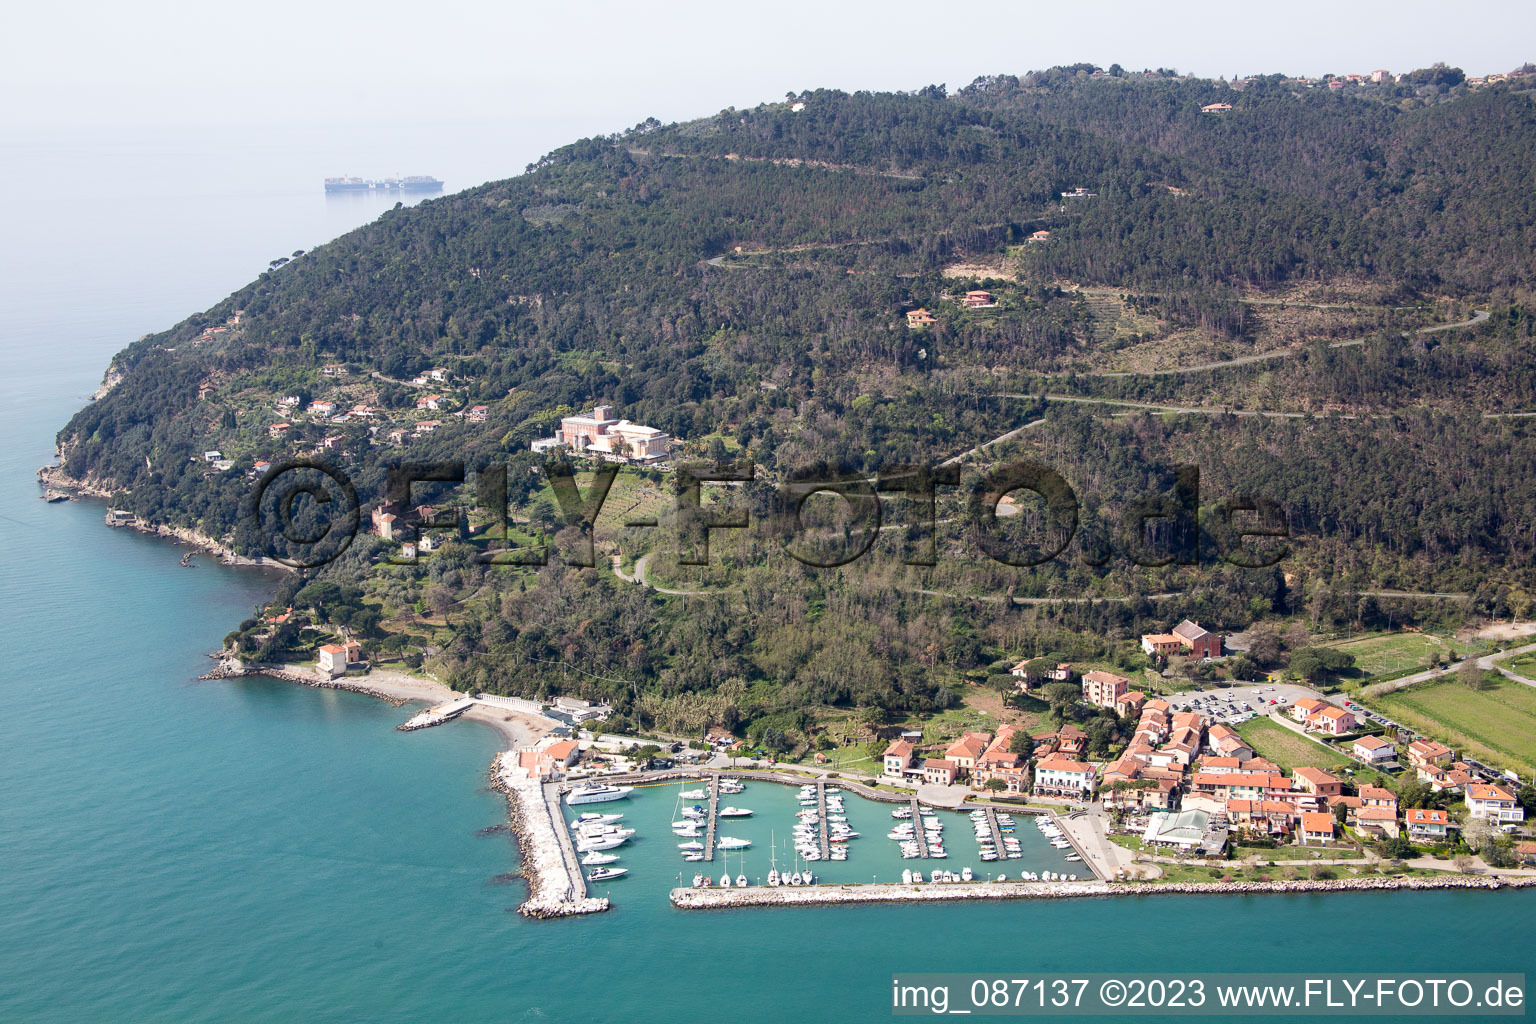 Luftbild von Fiumaretta di Ameglia im Bundesland Liguria, Italien